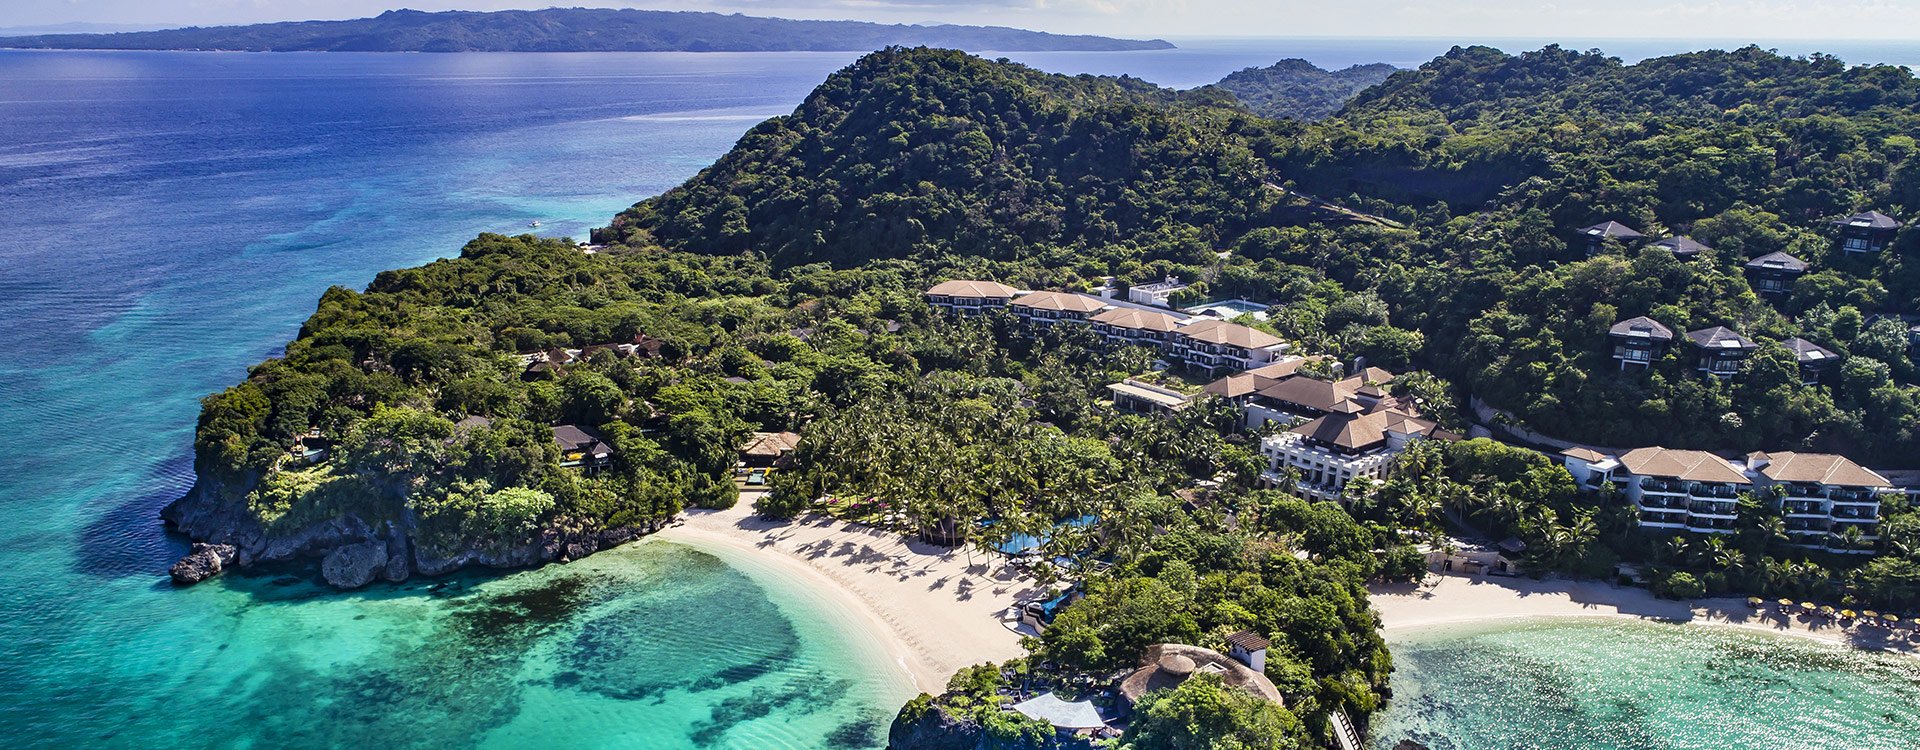 Shangri-La Boracay_Resort Aerial Overview